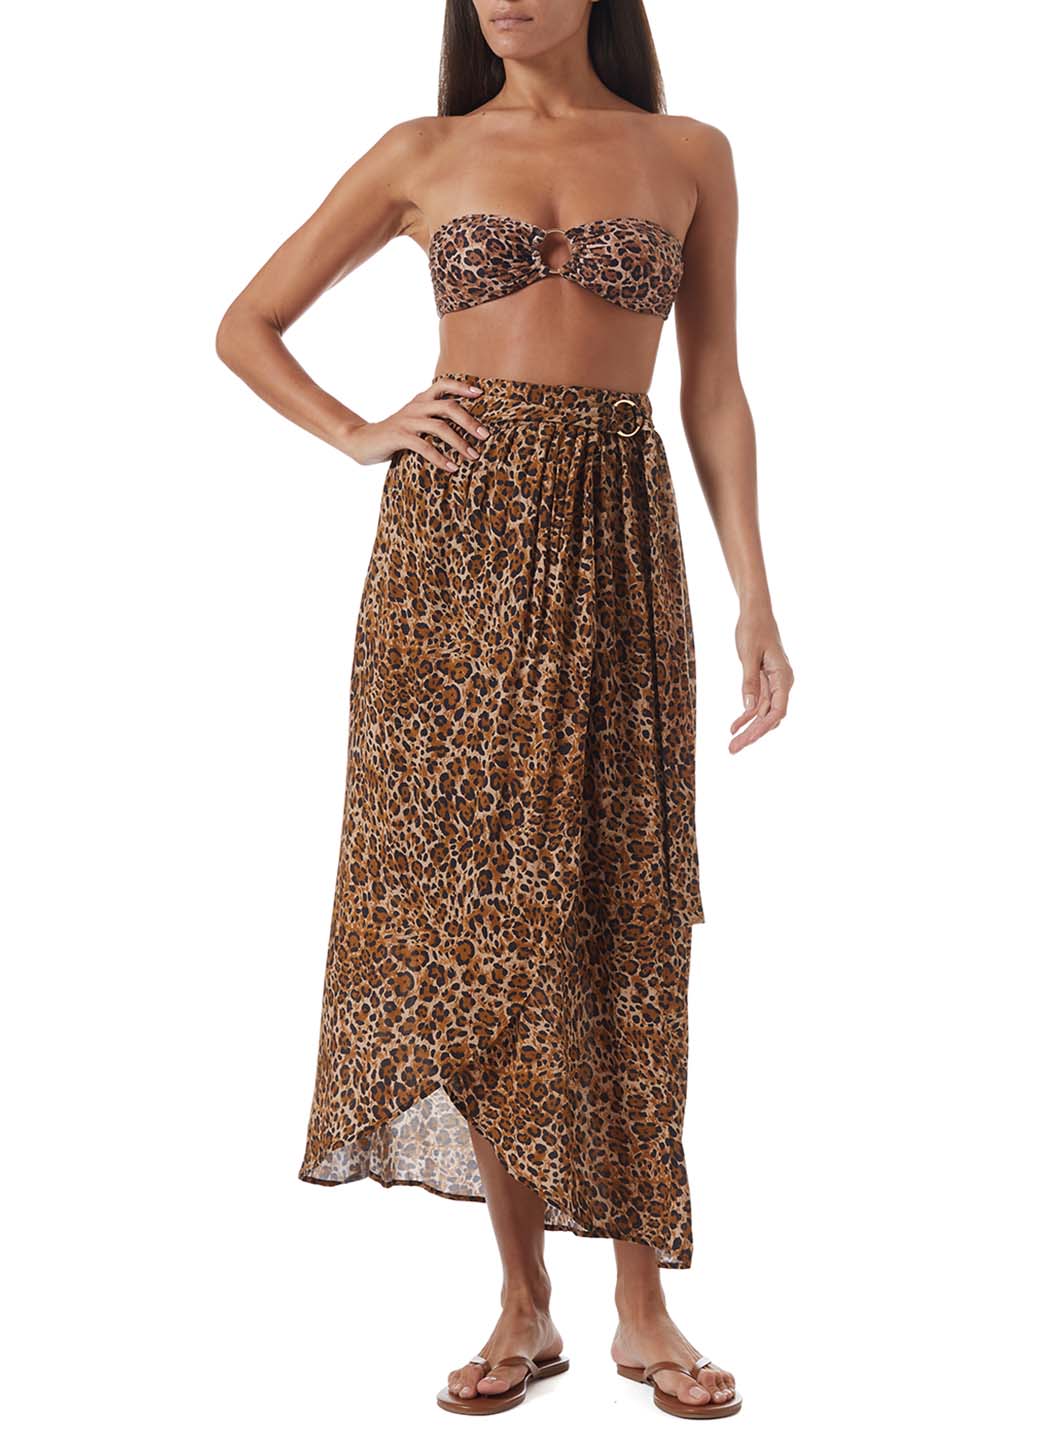 devlin cheetah print wrap skirt model_F